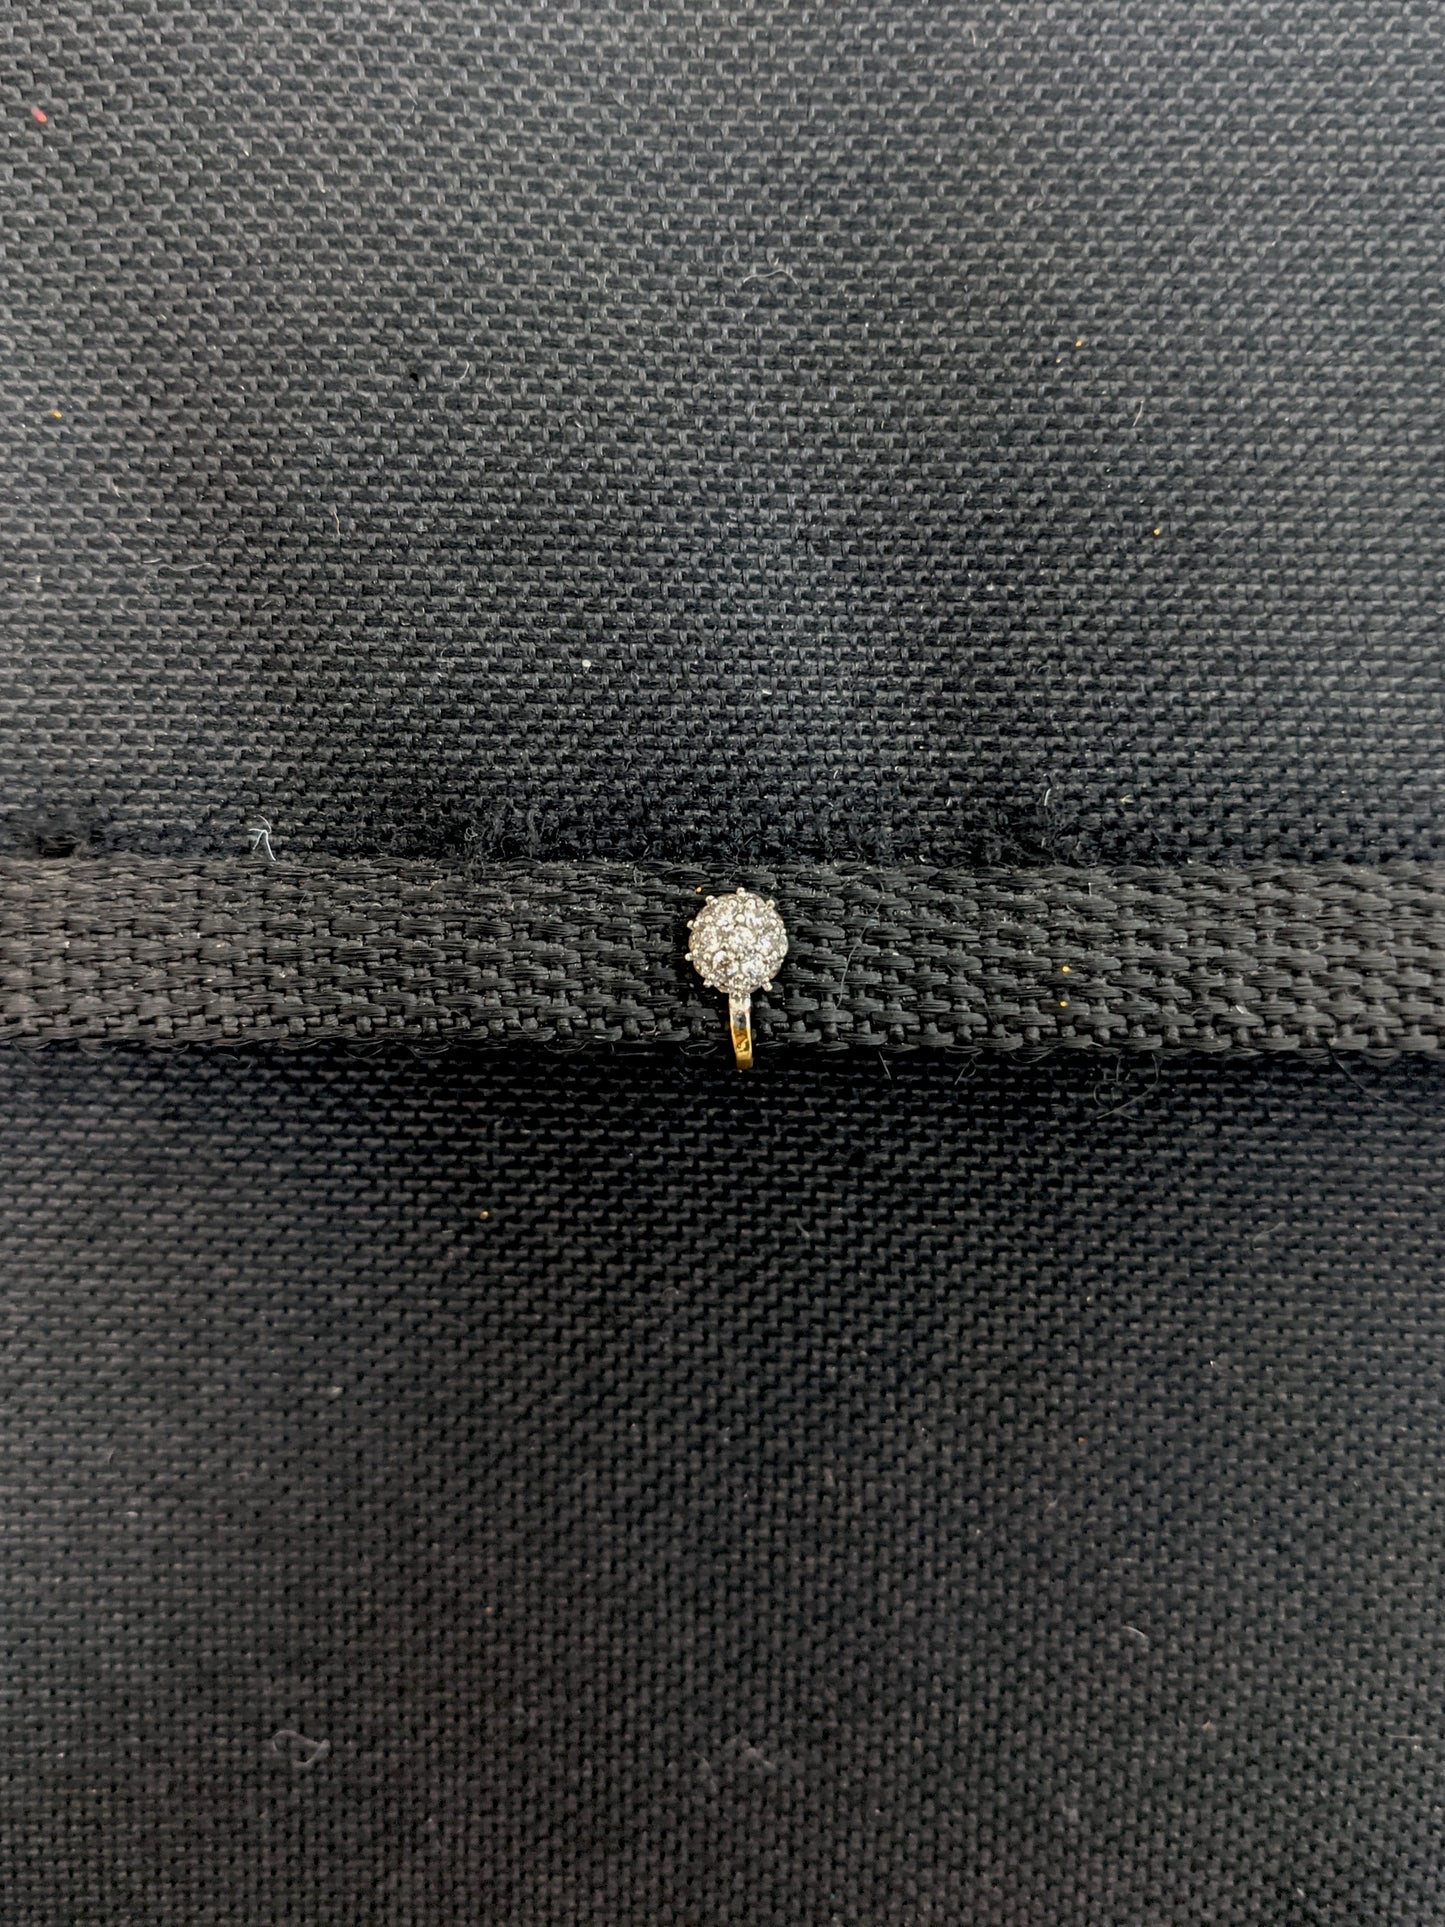 Small Clip on Nose Pin - Design 1